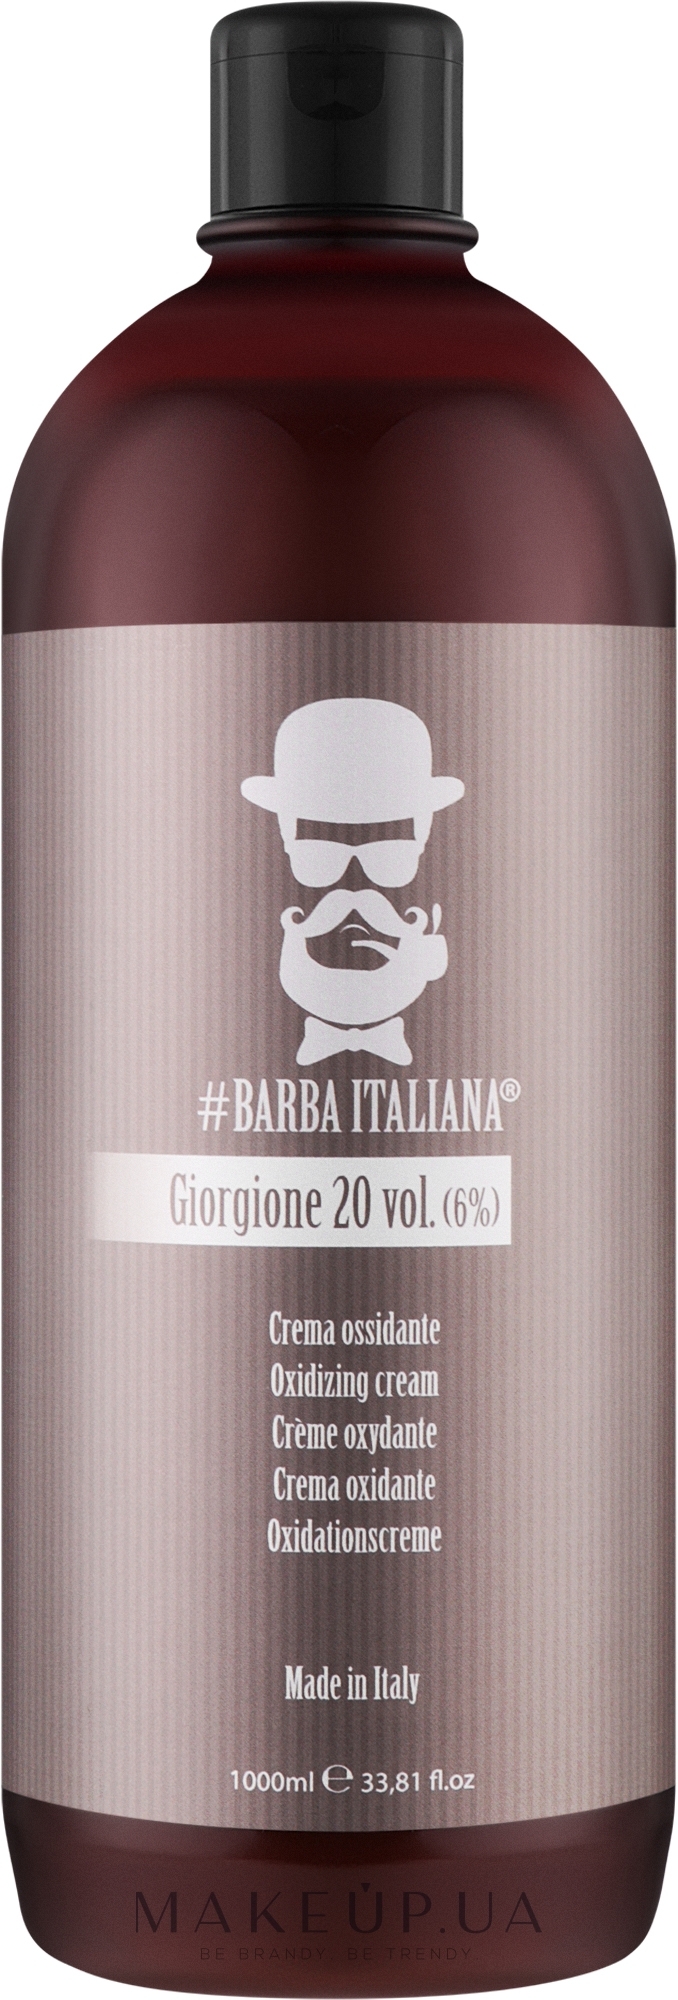 Крем-активатор 6% - Barba Italiana Giorgione 20 vol — фото 1000ml